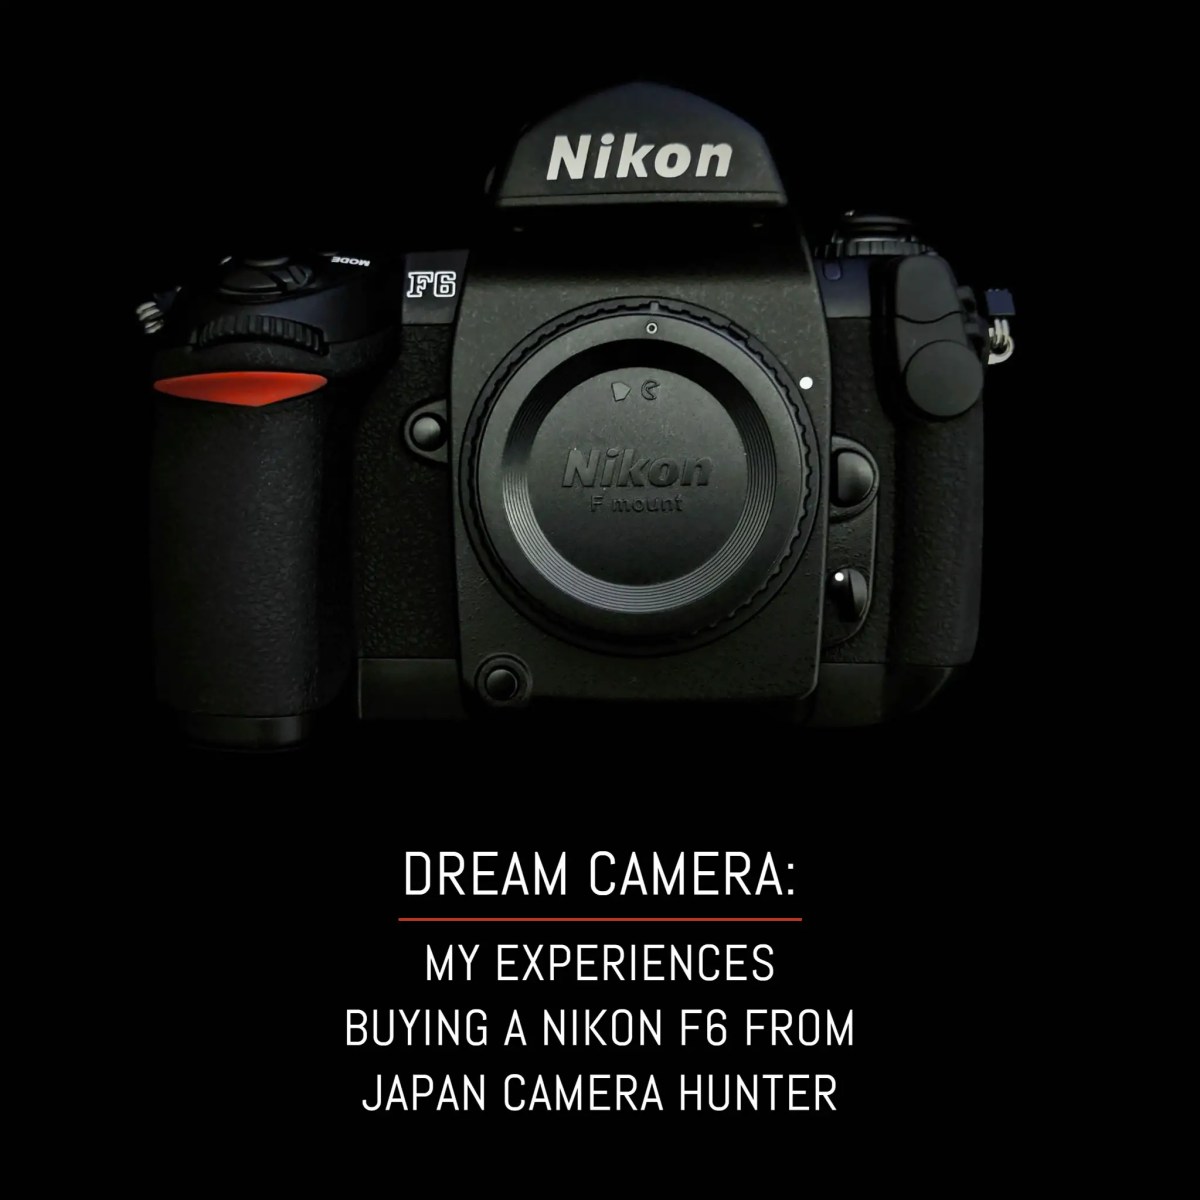 Dream camera: My experiences buying a Nikon F6 from Japan Camera Hunter